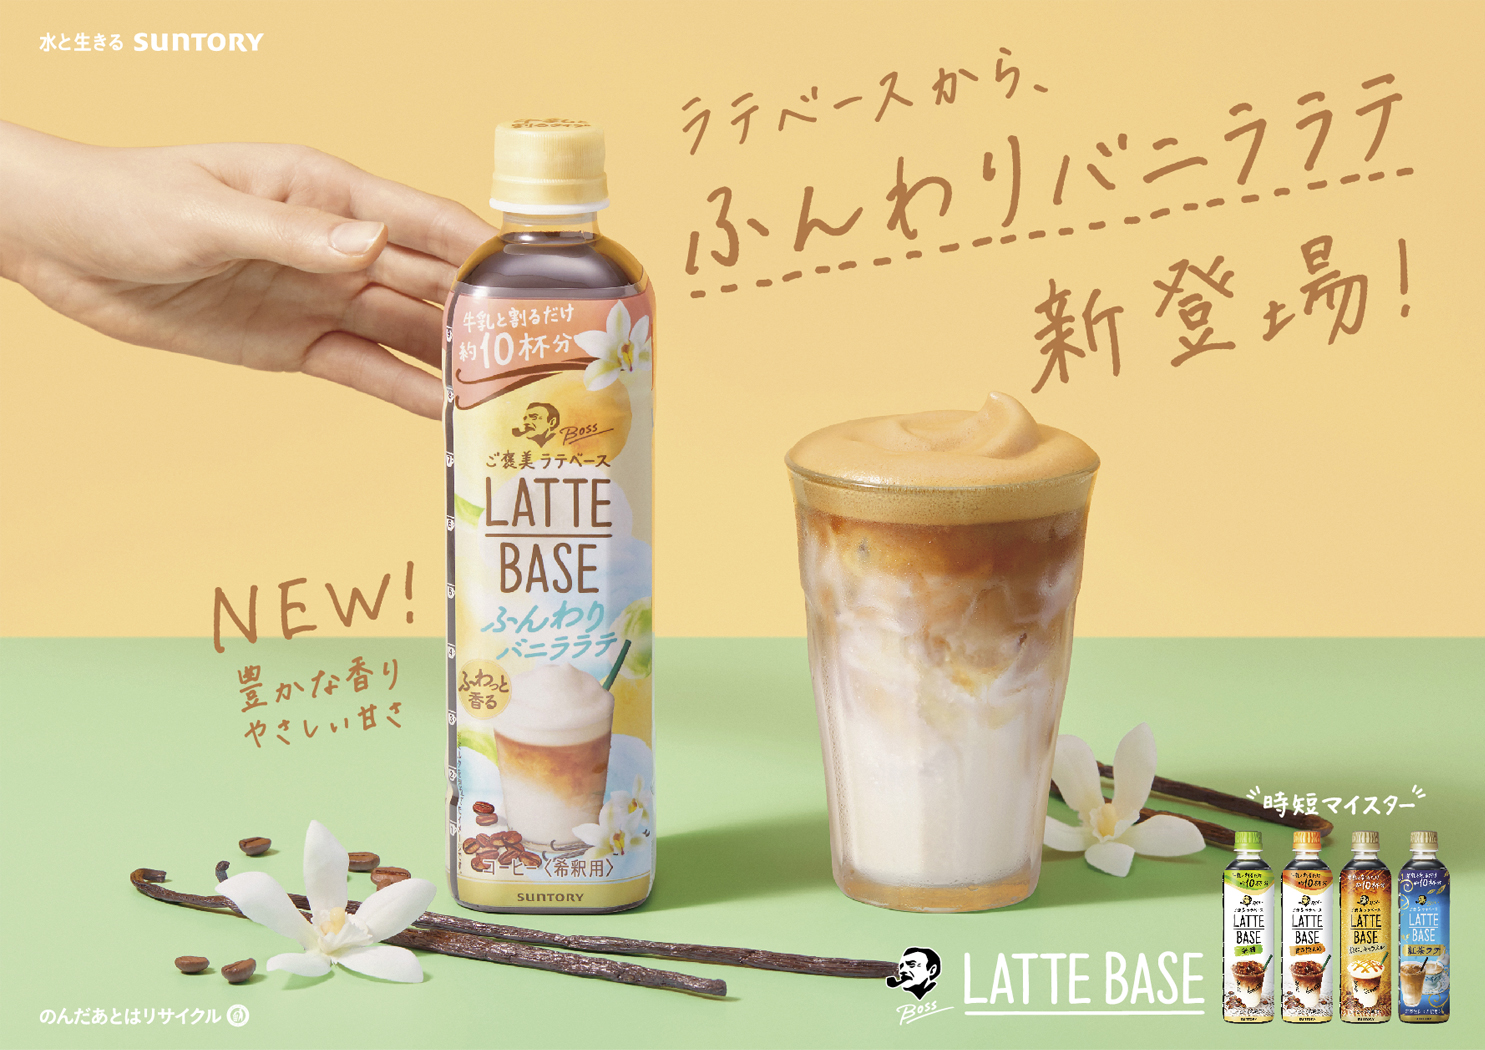 Suntory boss LatteBase vanillalatte  B3board